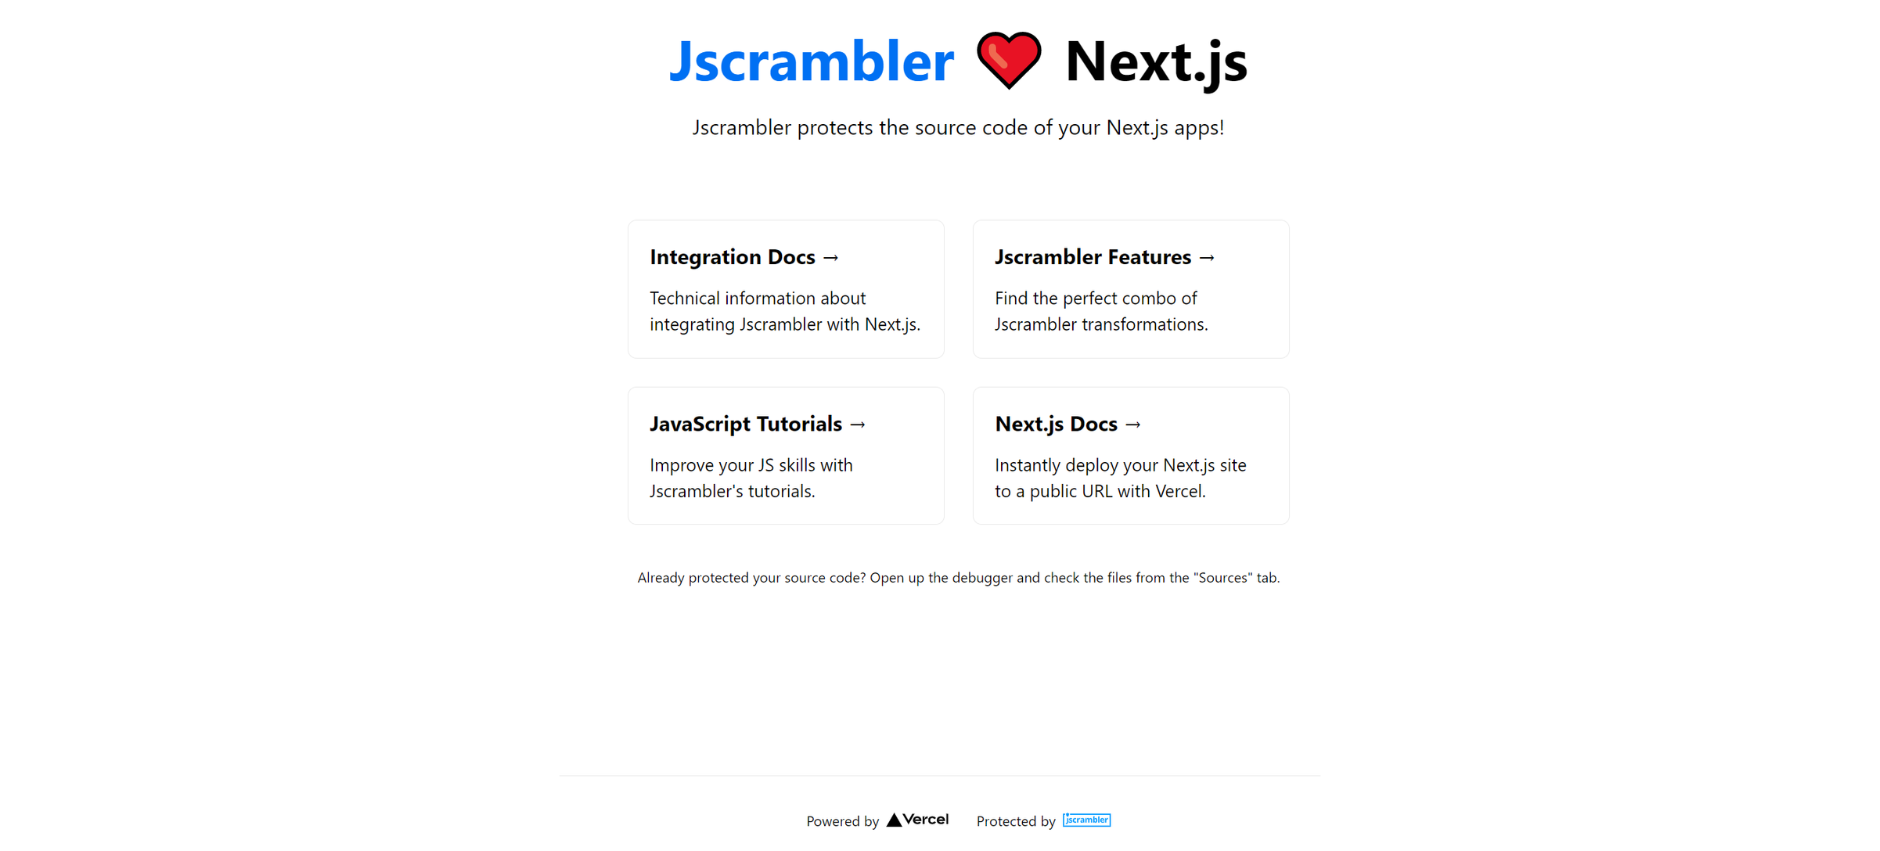 example-Jscrambler-integration-with-Next.js-app